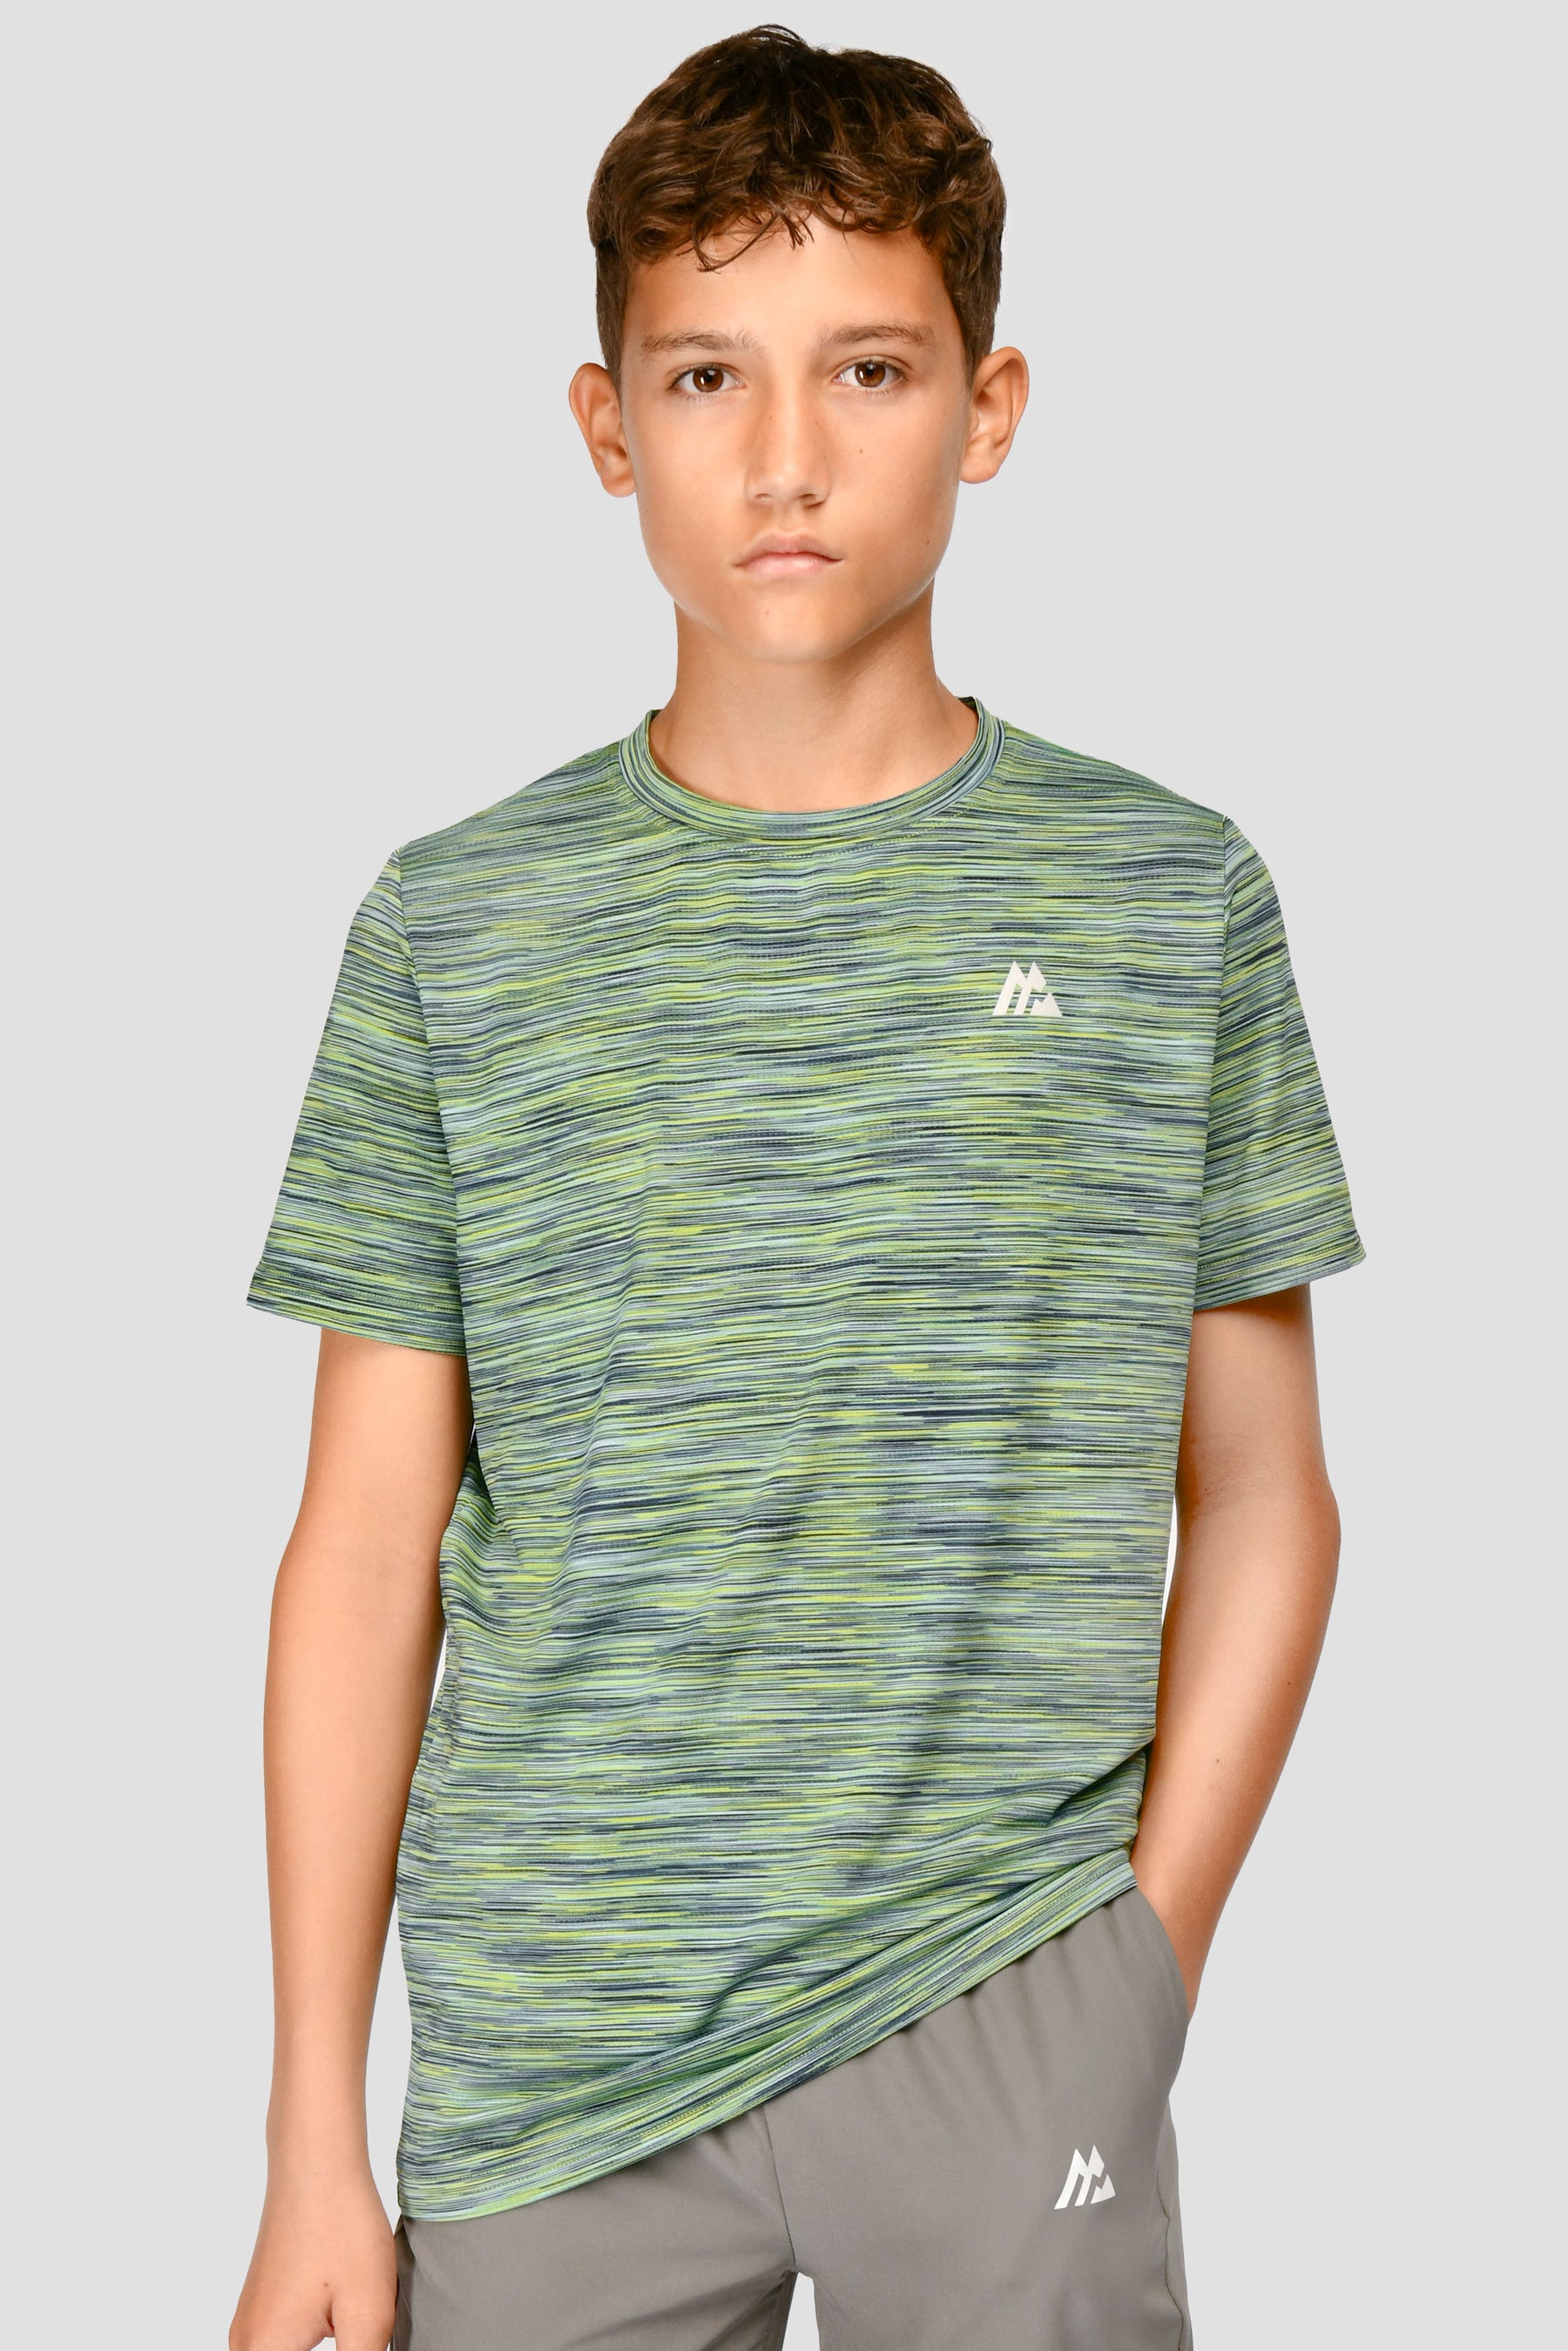 Junior Trail 2.0 T-Shirt - Lime Green/Capri Multi